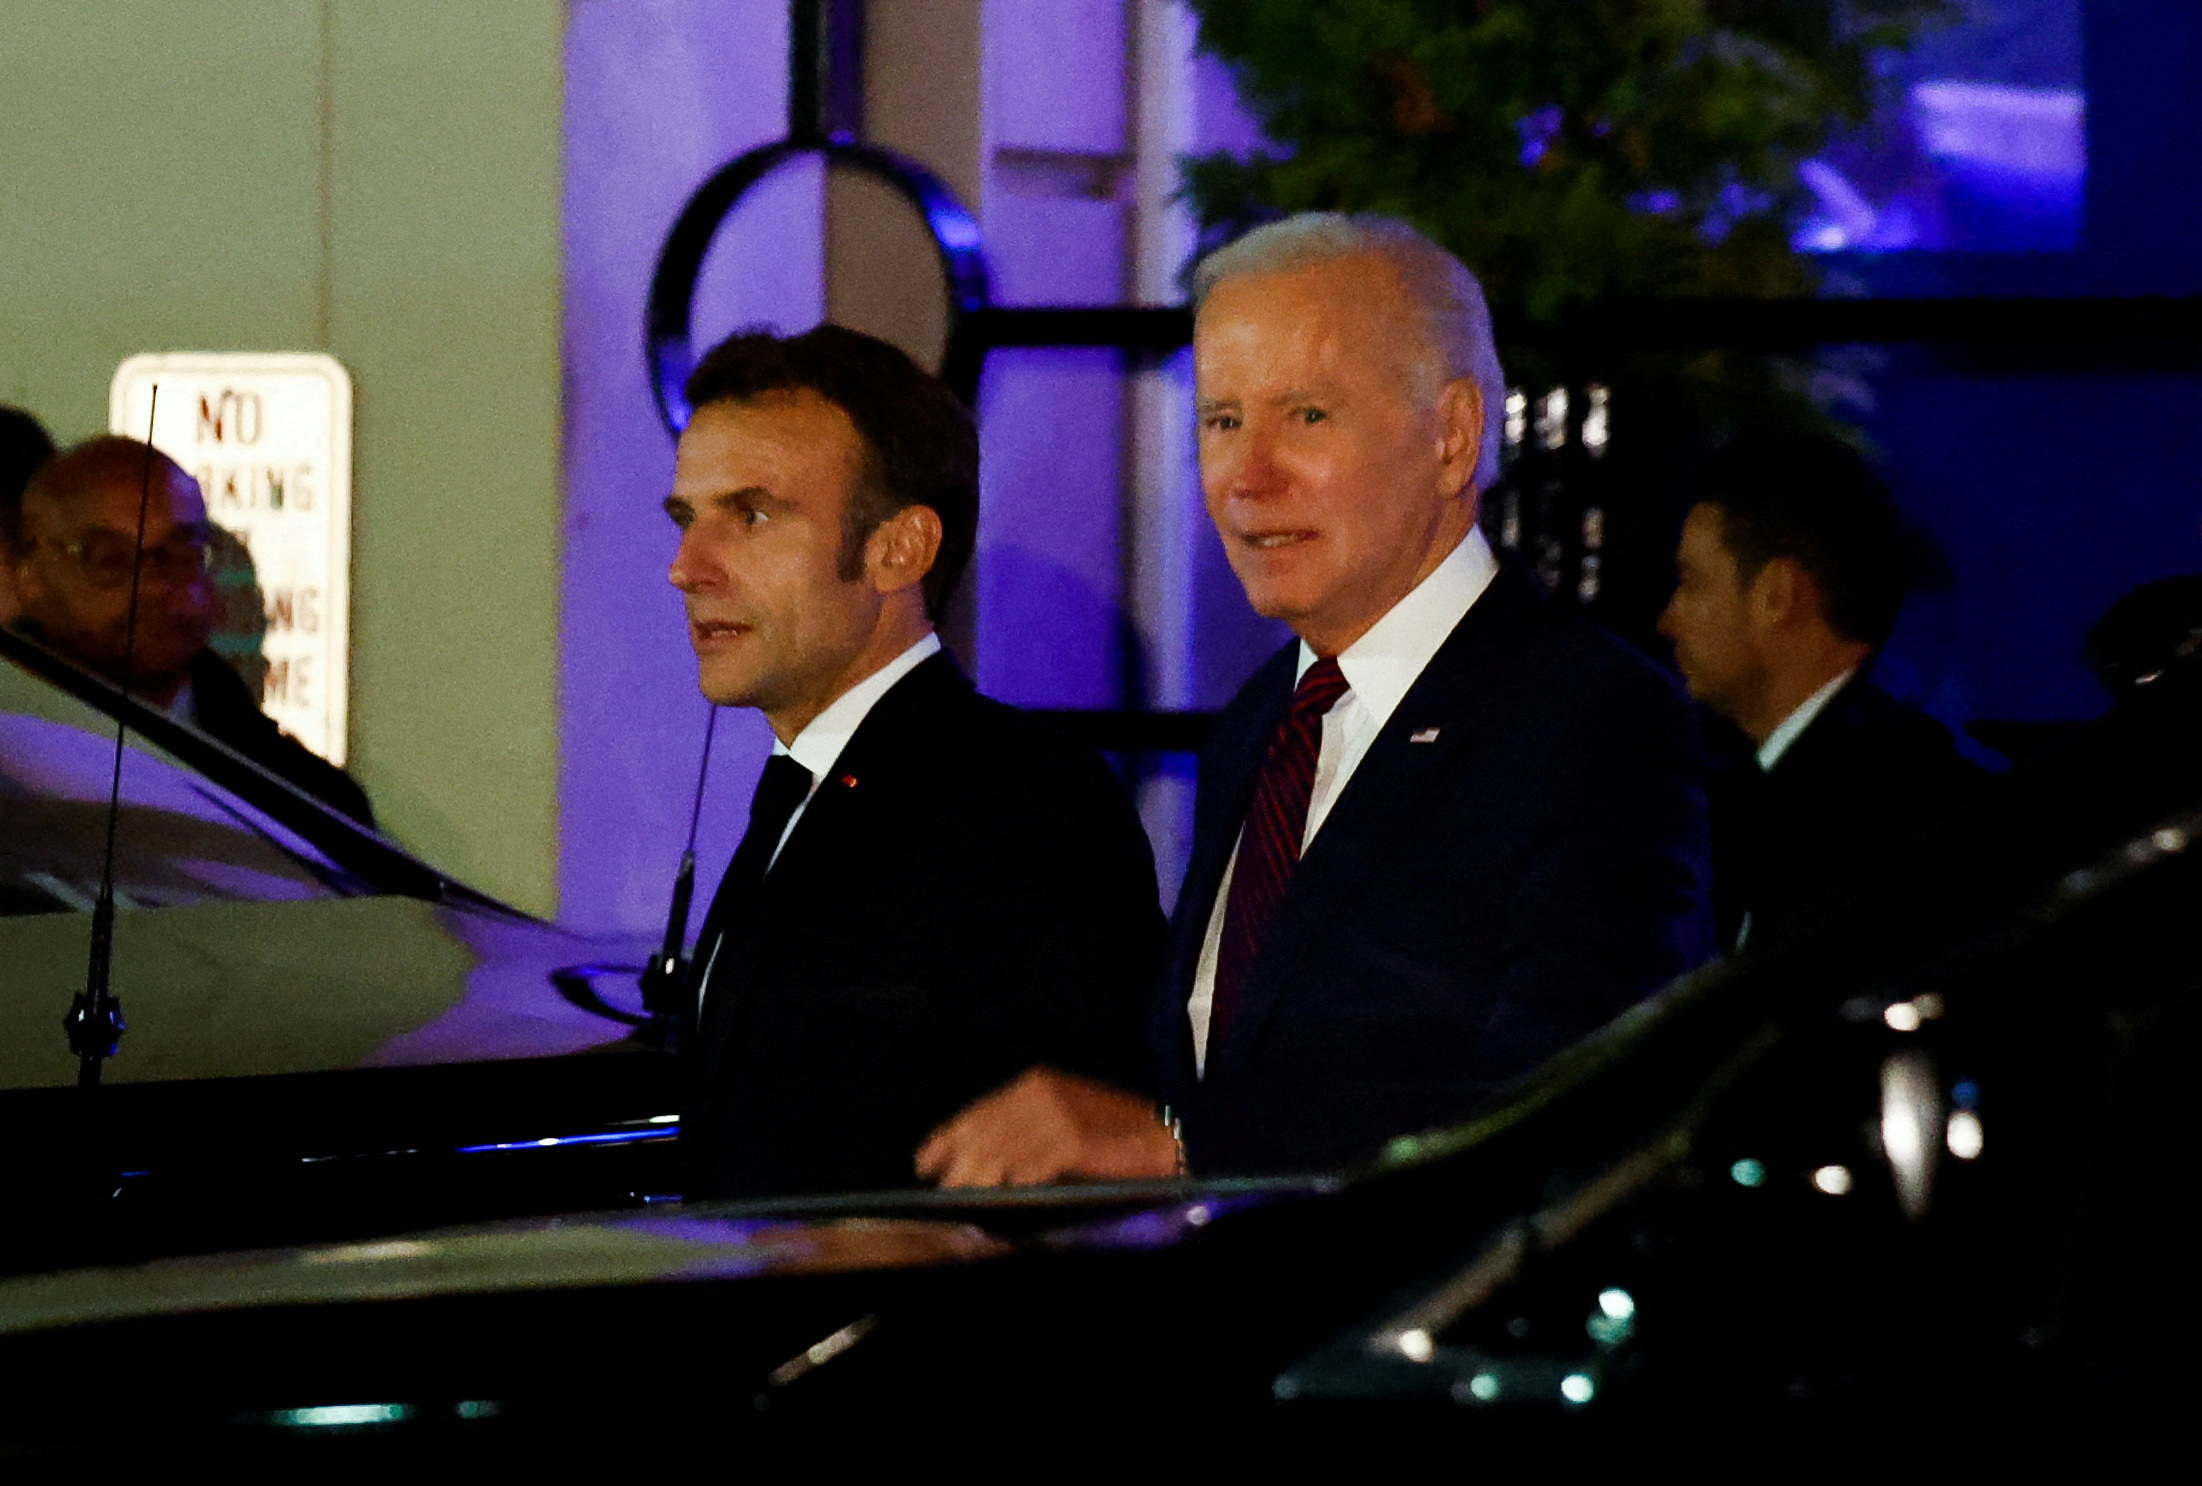 Il presidente degli Stati Uniti Joe Biden e il presidente francese Emmanuel Macron cenano al ristorante Viola Marie